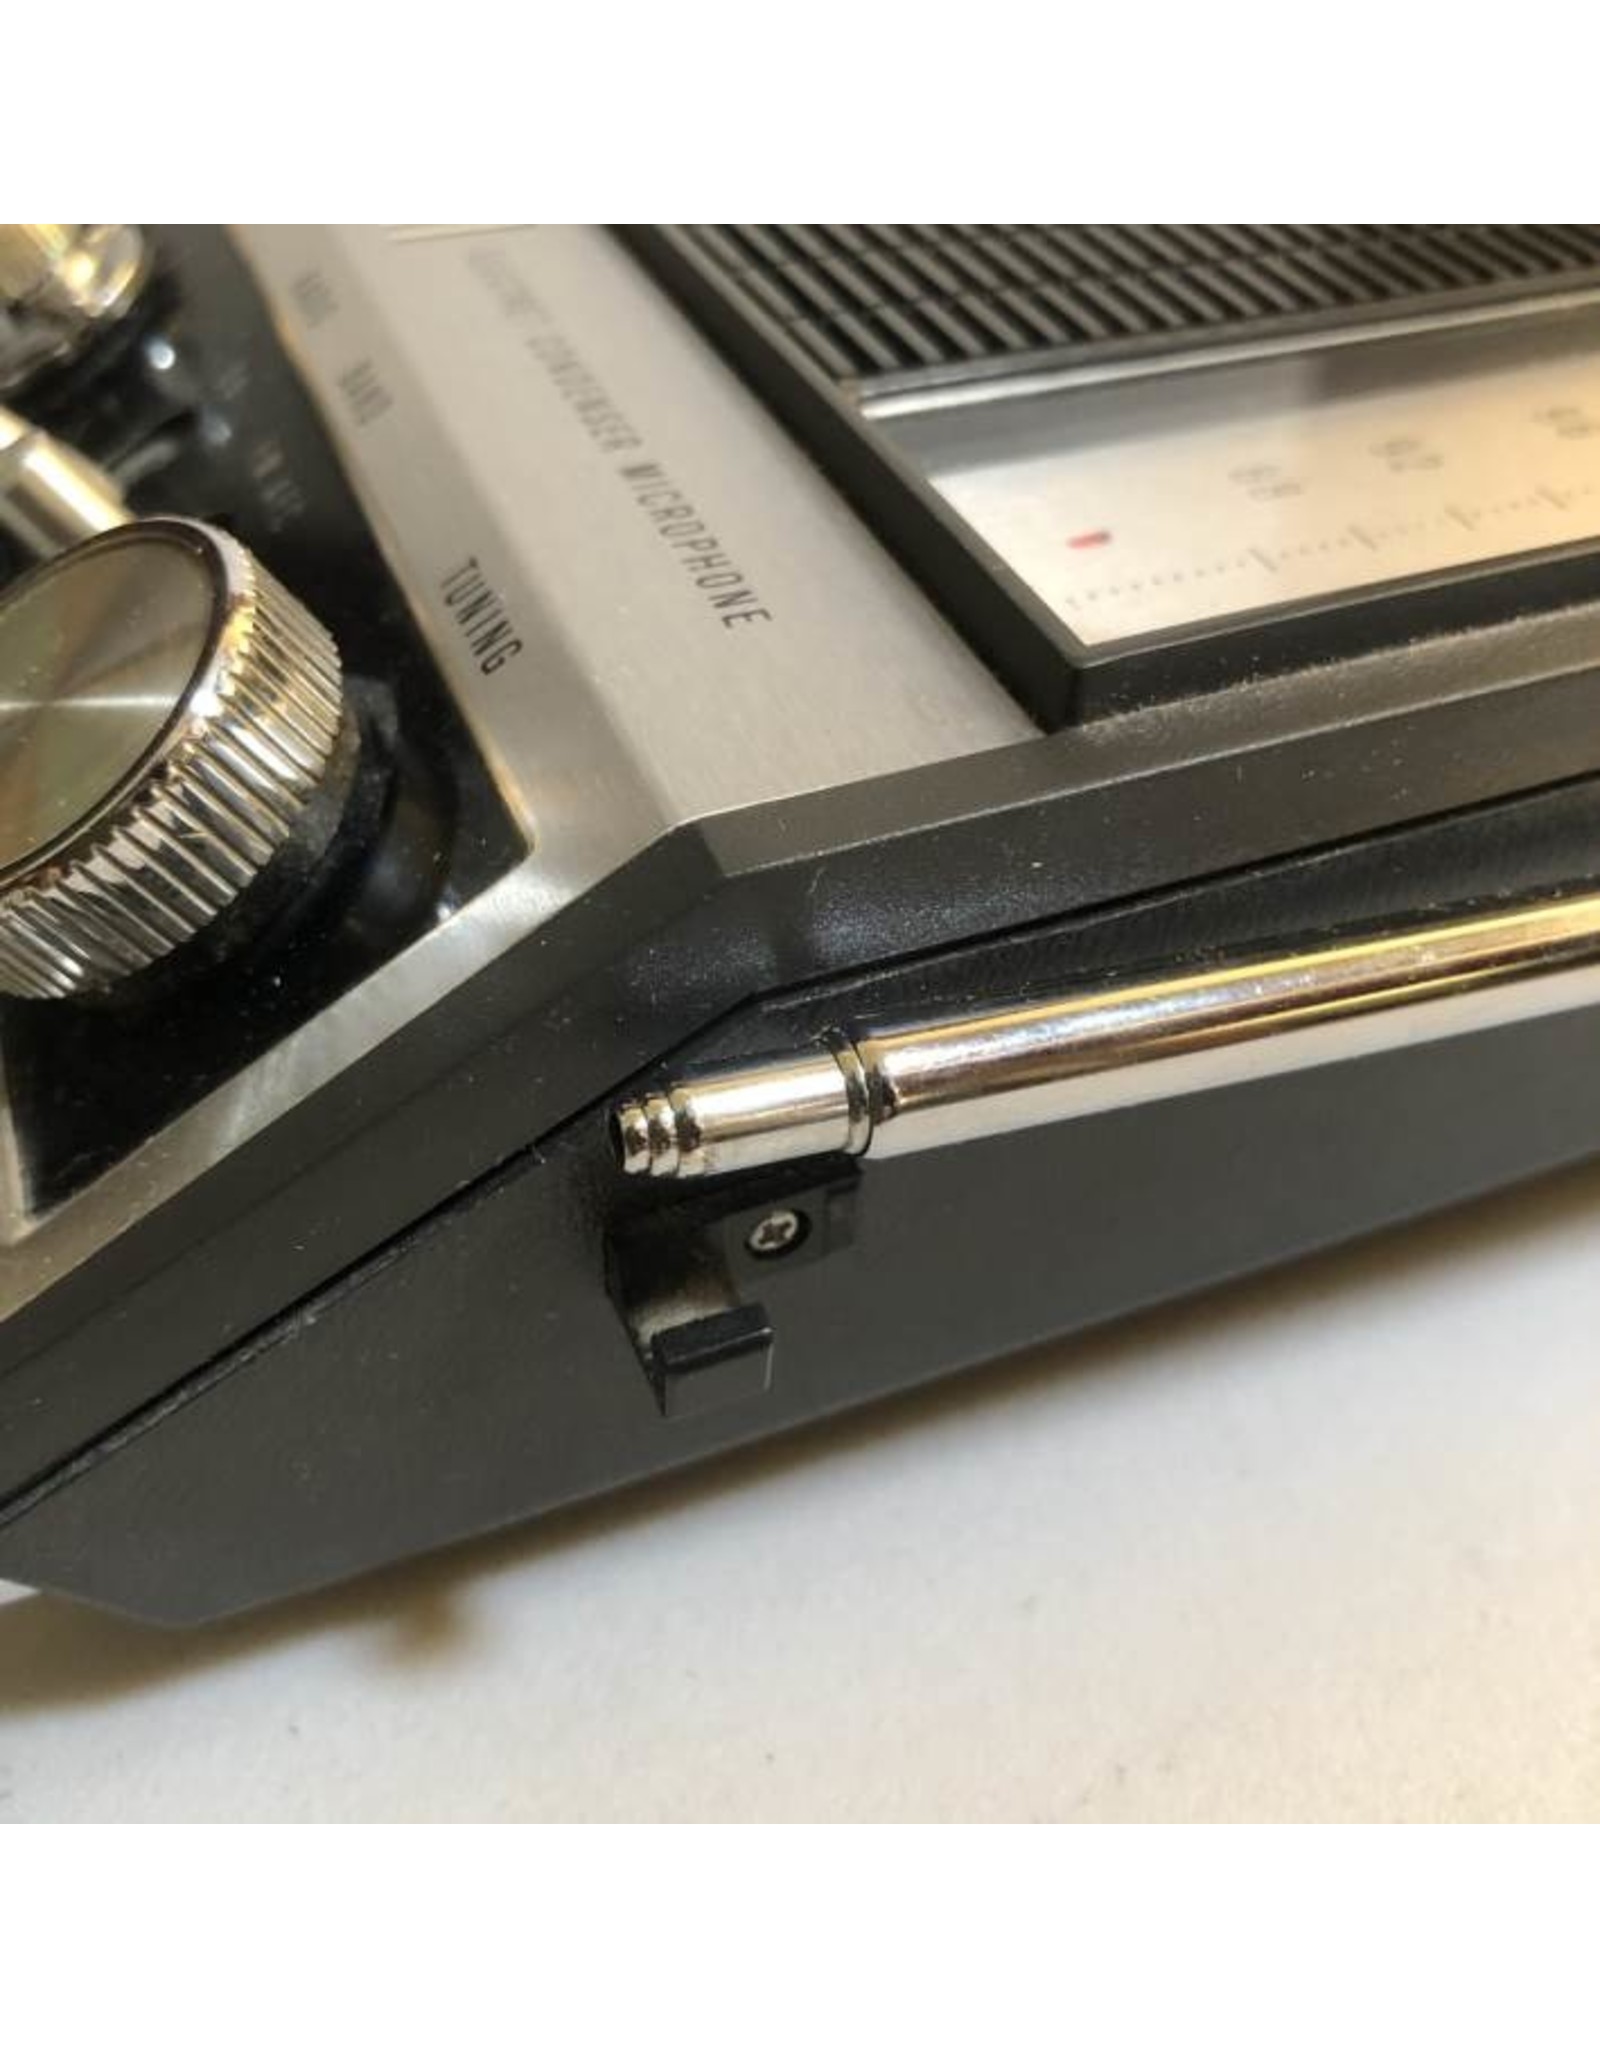 Tape deck - Sony CF-300 Cassette-Corder, AM/FM radio